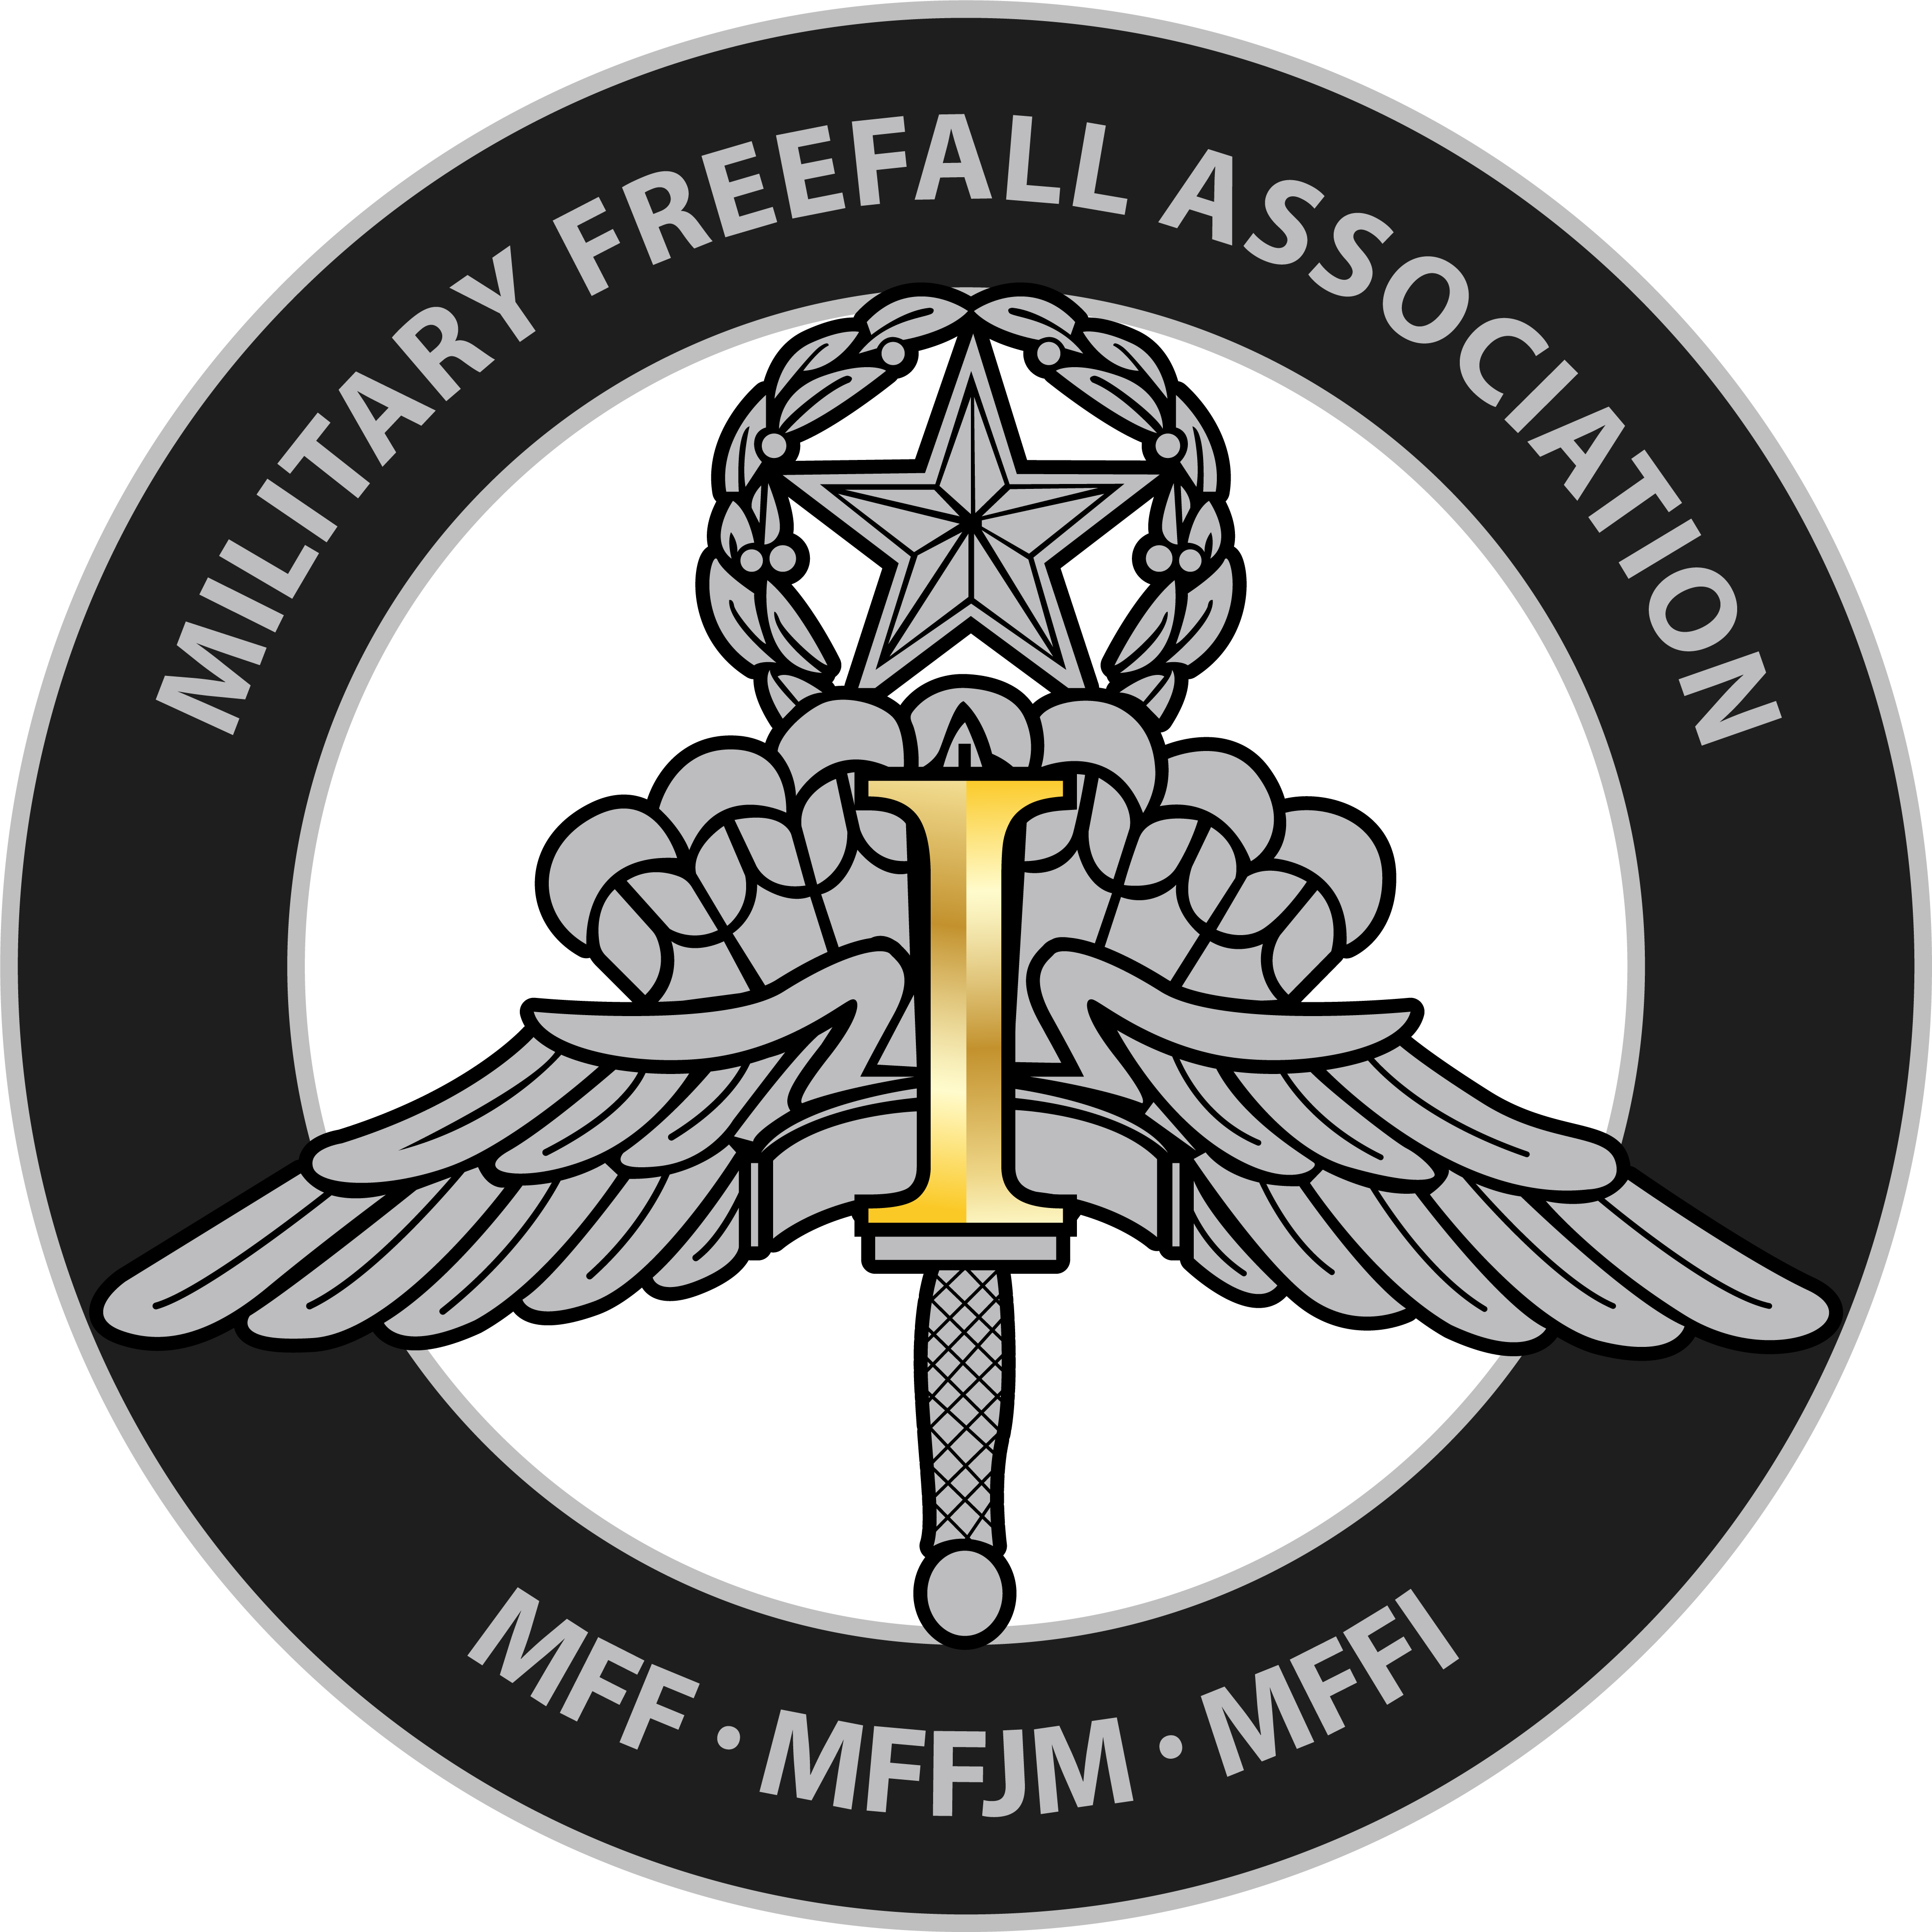 MILITARY FREEFALL ASSOCIATION logo